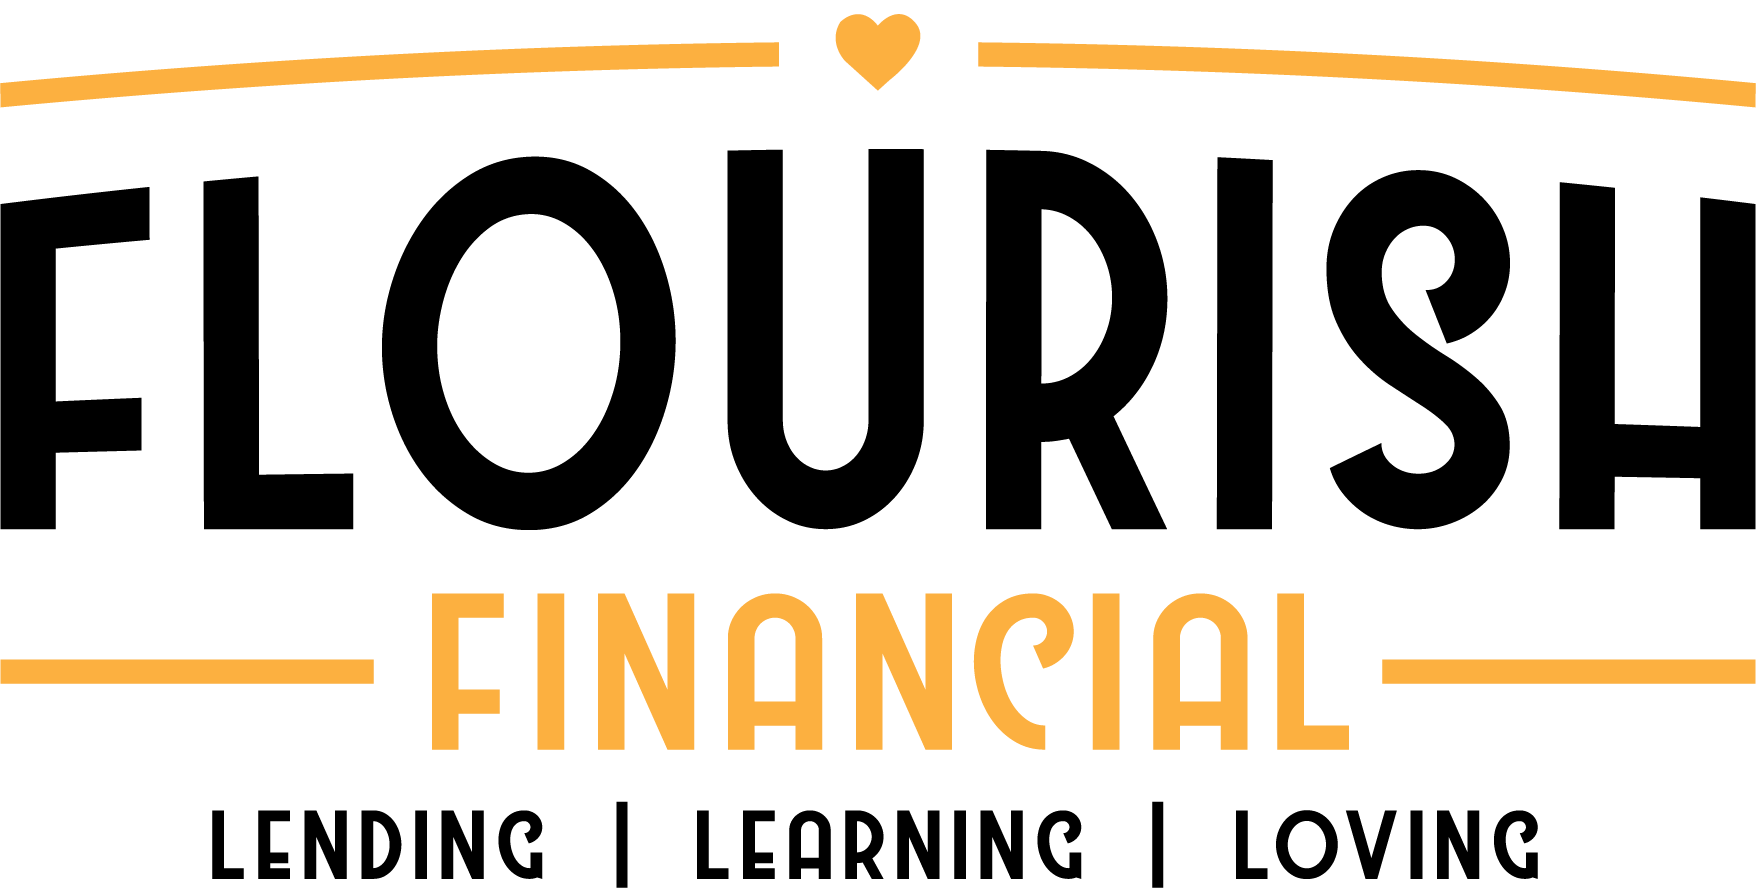 Flourish financial - lending, learning, loving logo